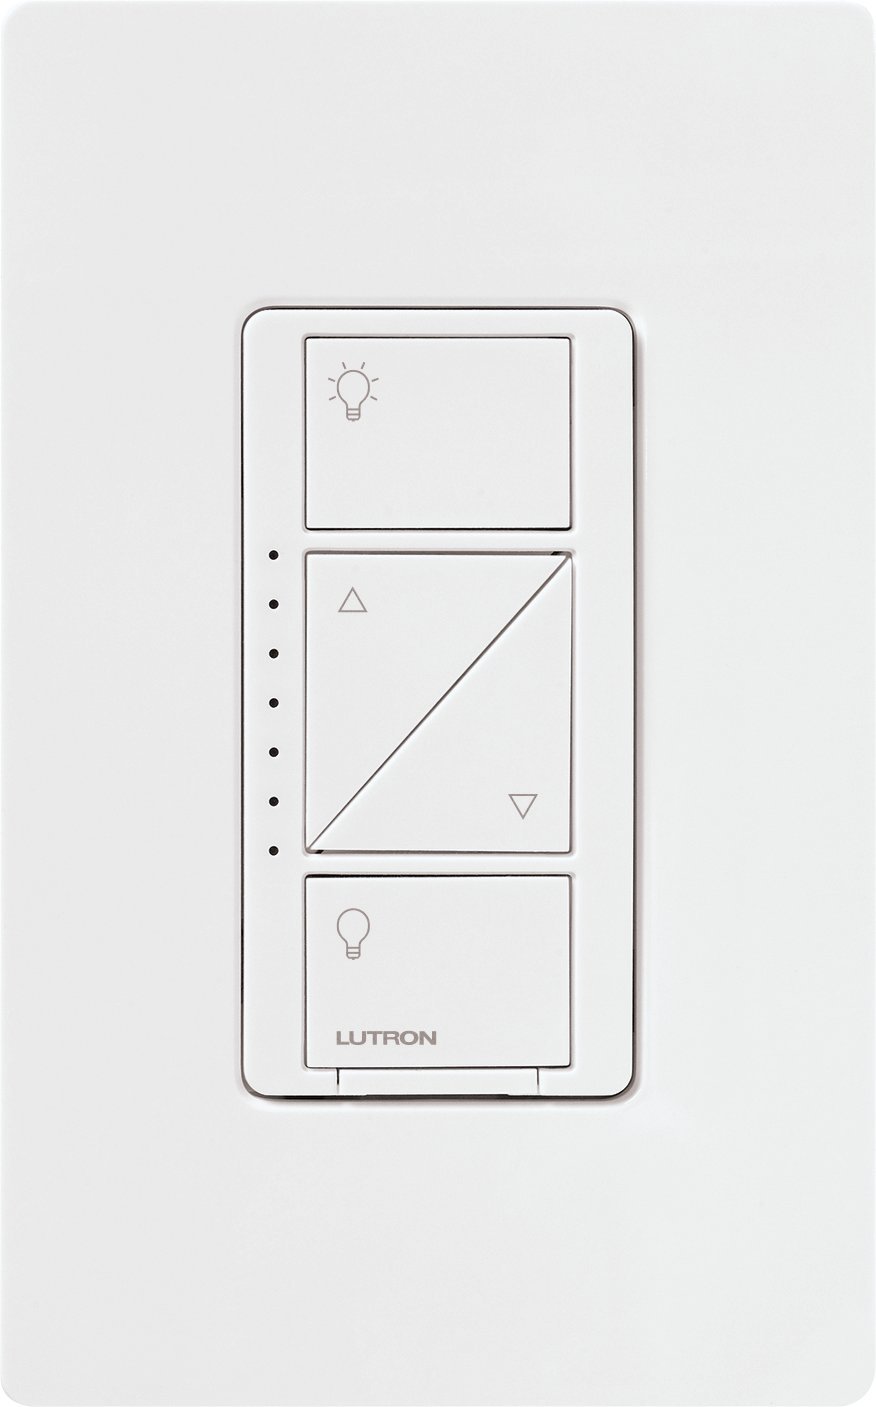 LUTRON P-PKG1W-WH Caseta Wireless 600-watt/150-watt Multi-Location In-Wall Dimmer with Pico Remote Control Kit, White